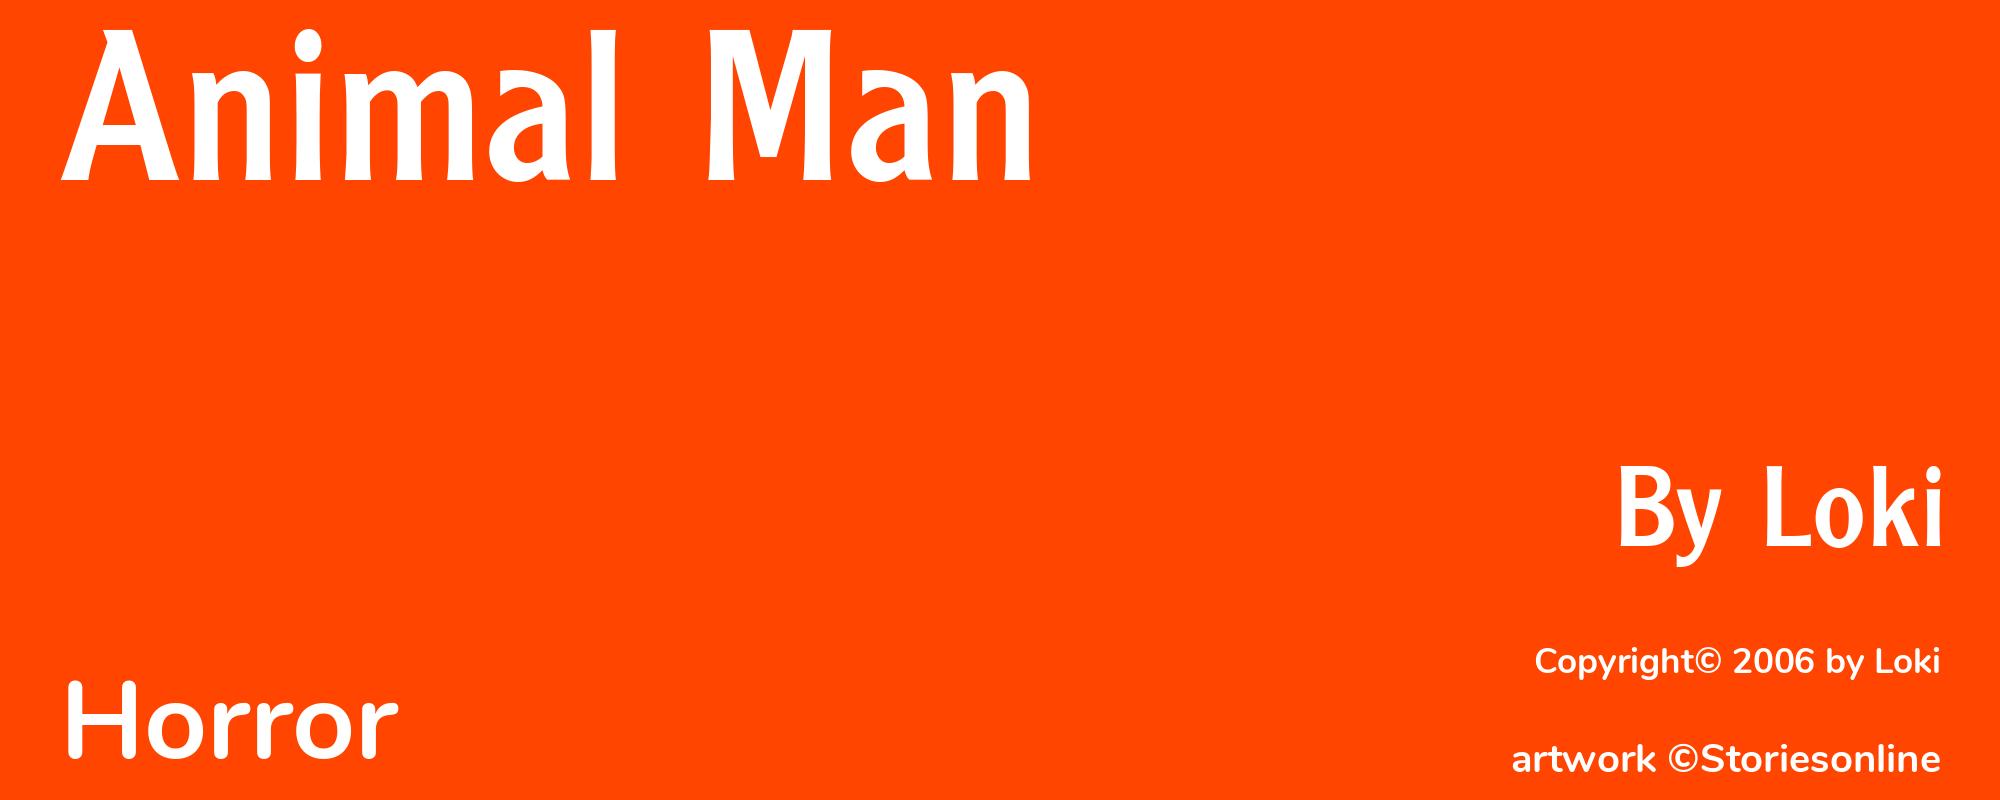 Animal Man - Cover